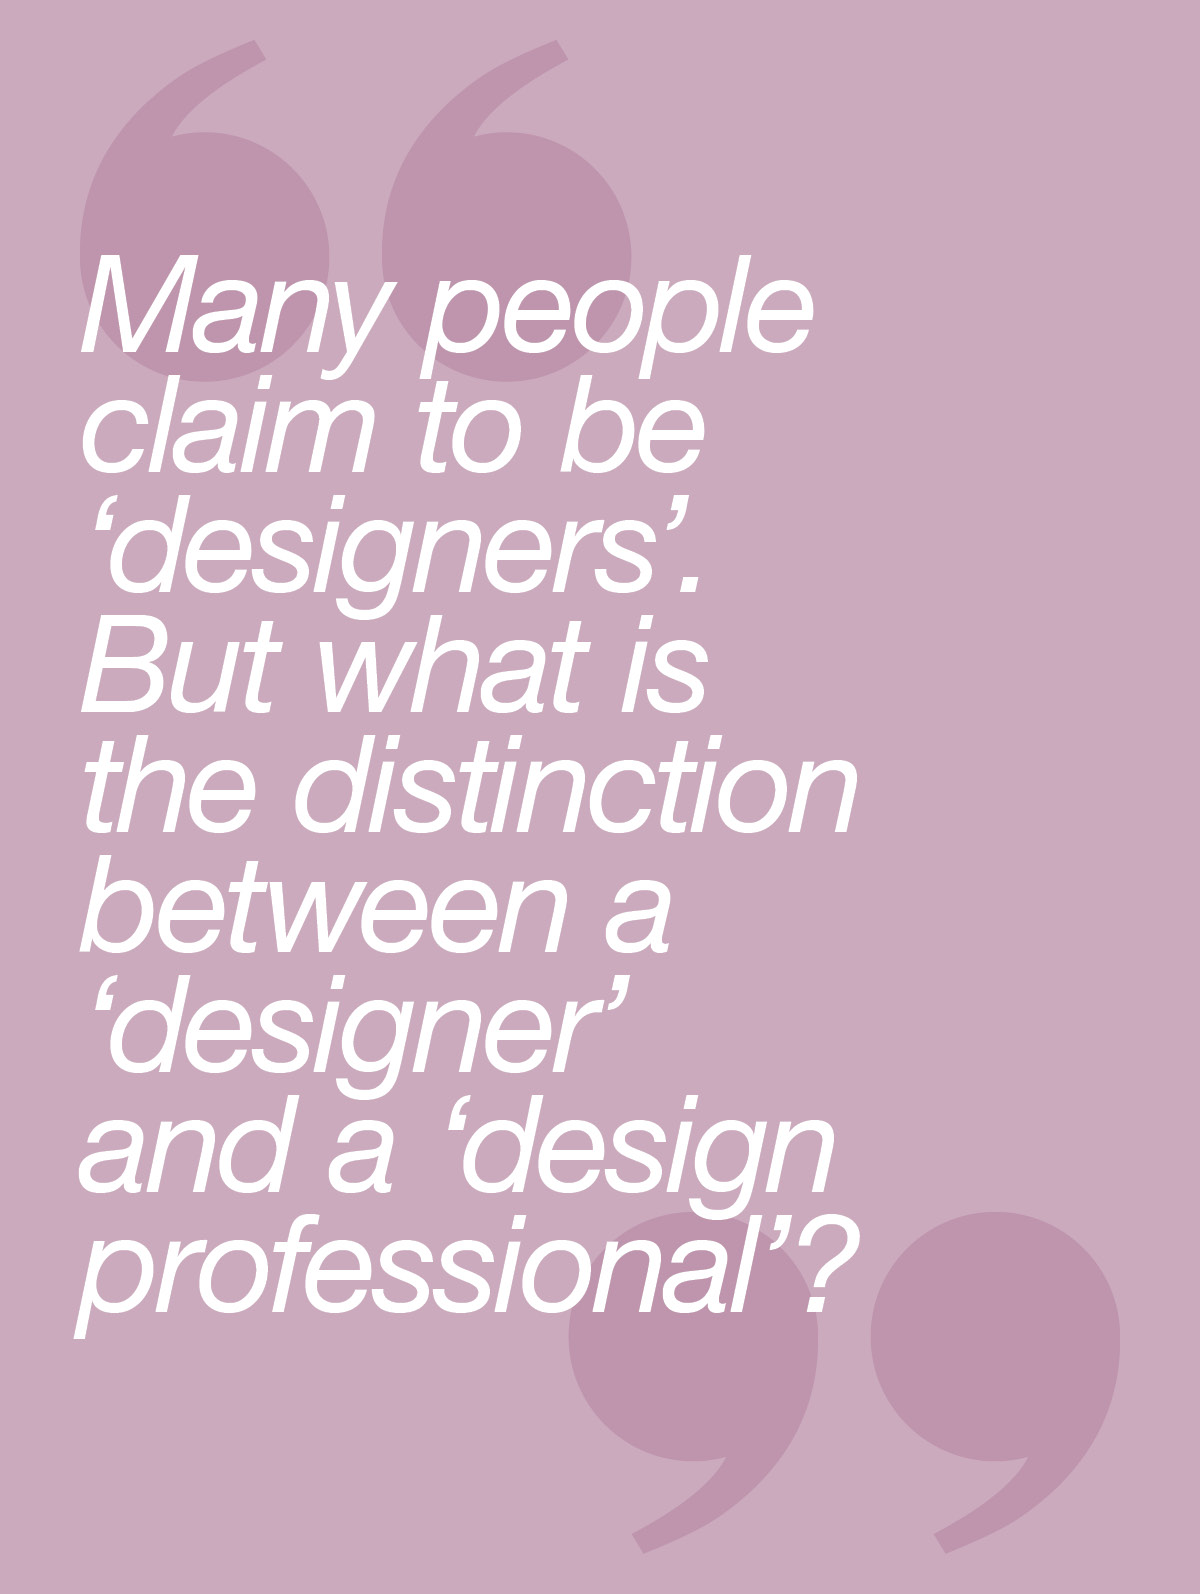 design professionalism: standards of professional conduct